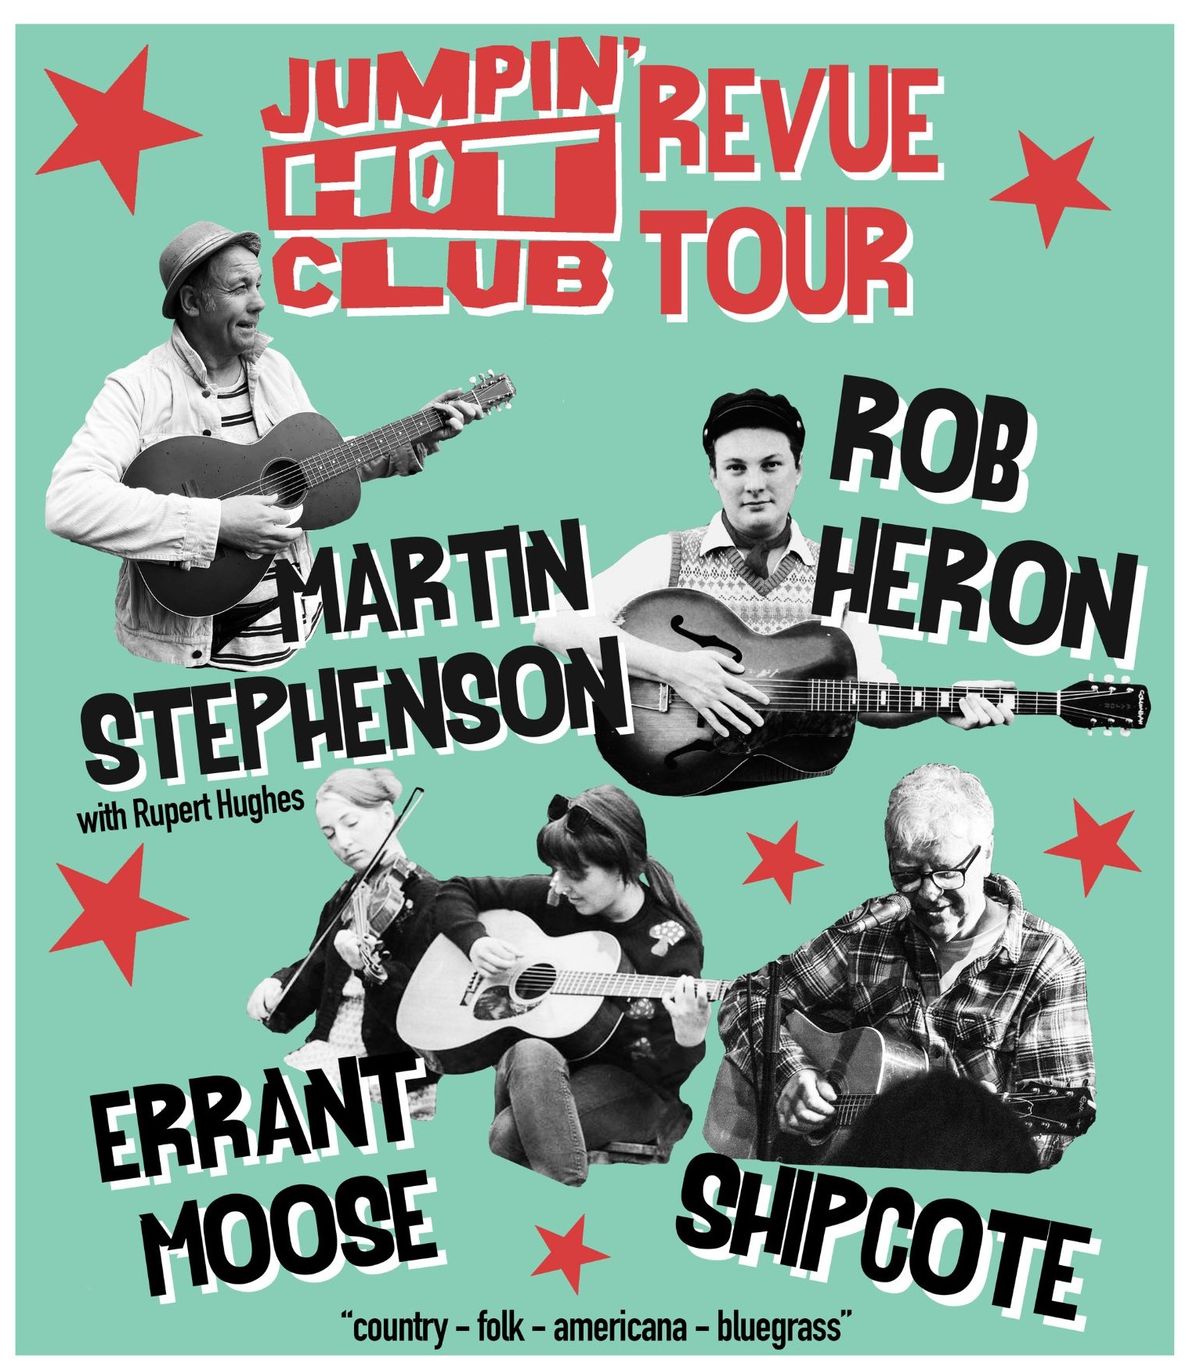 Jumpin Hot Revue with Martin Stephenson & Rupert Hughes, Rob Heron, Errant Mouse, Shipcote